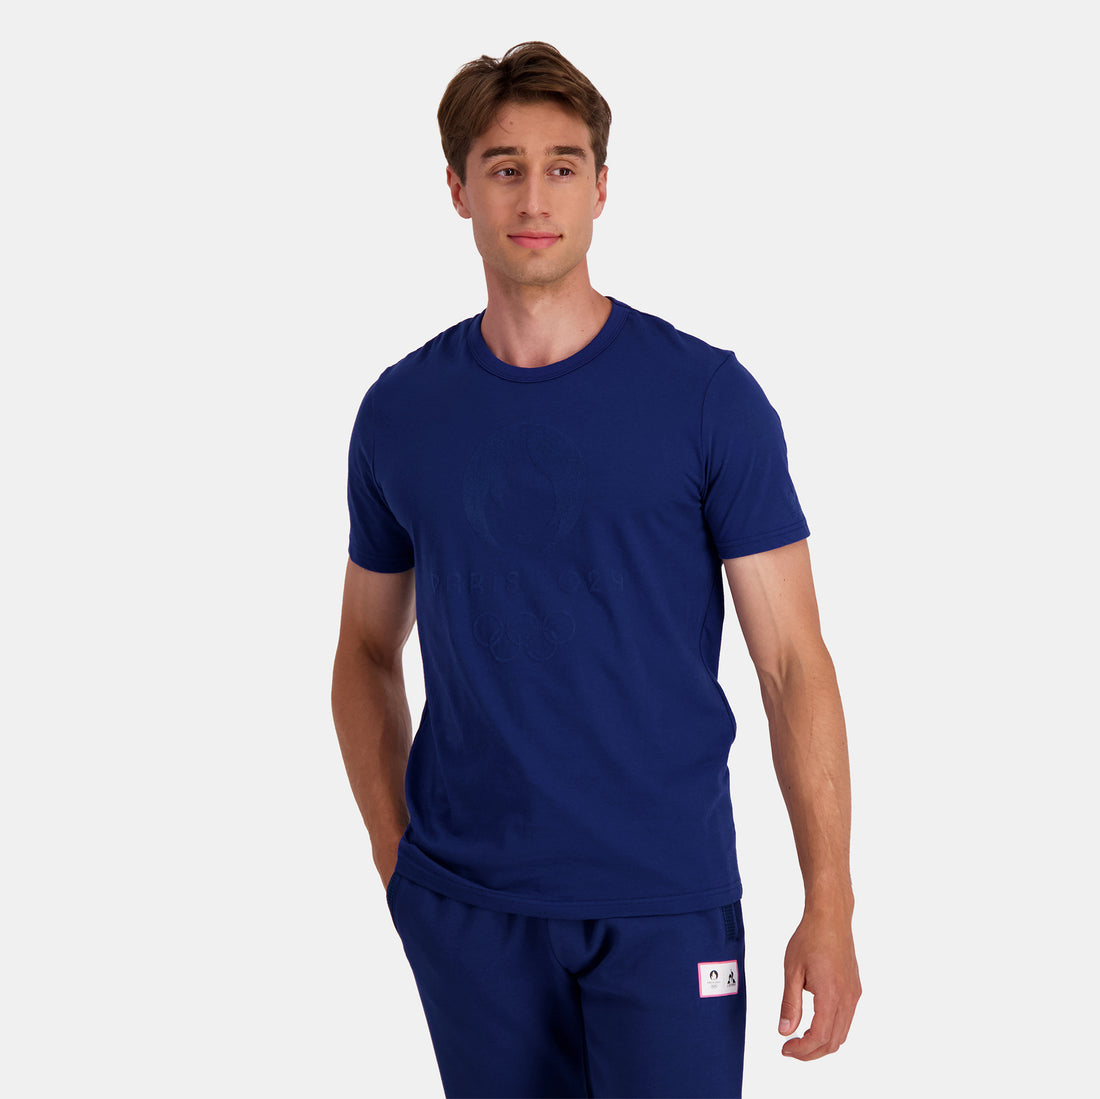 2321332-GRAPHIC P24 Tee SS N°1 M blue depths | T-shirt Unisexe